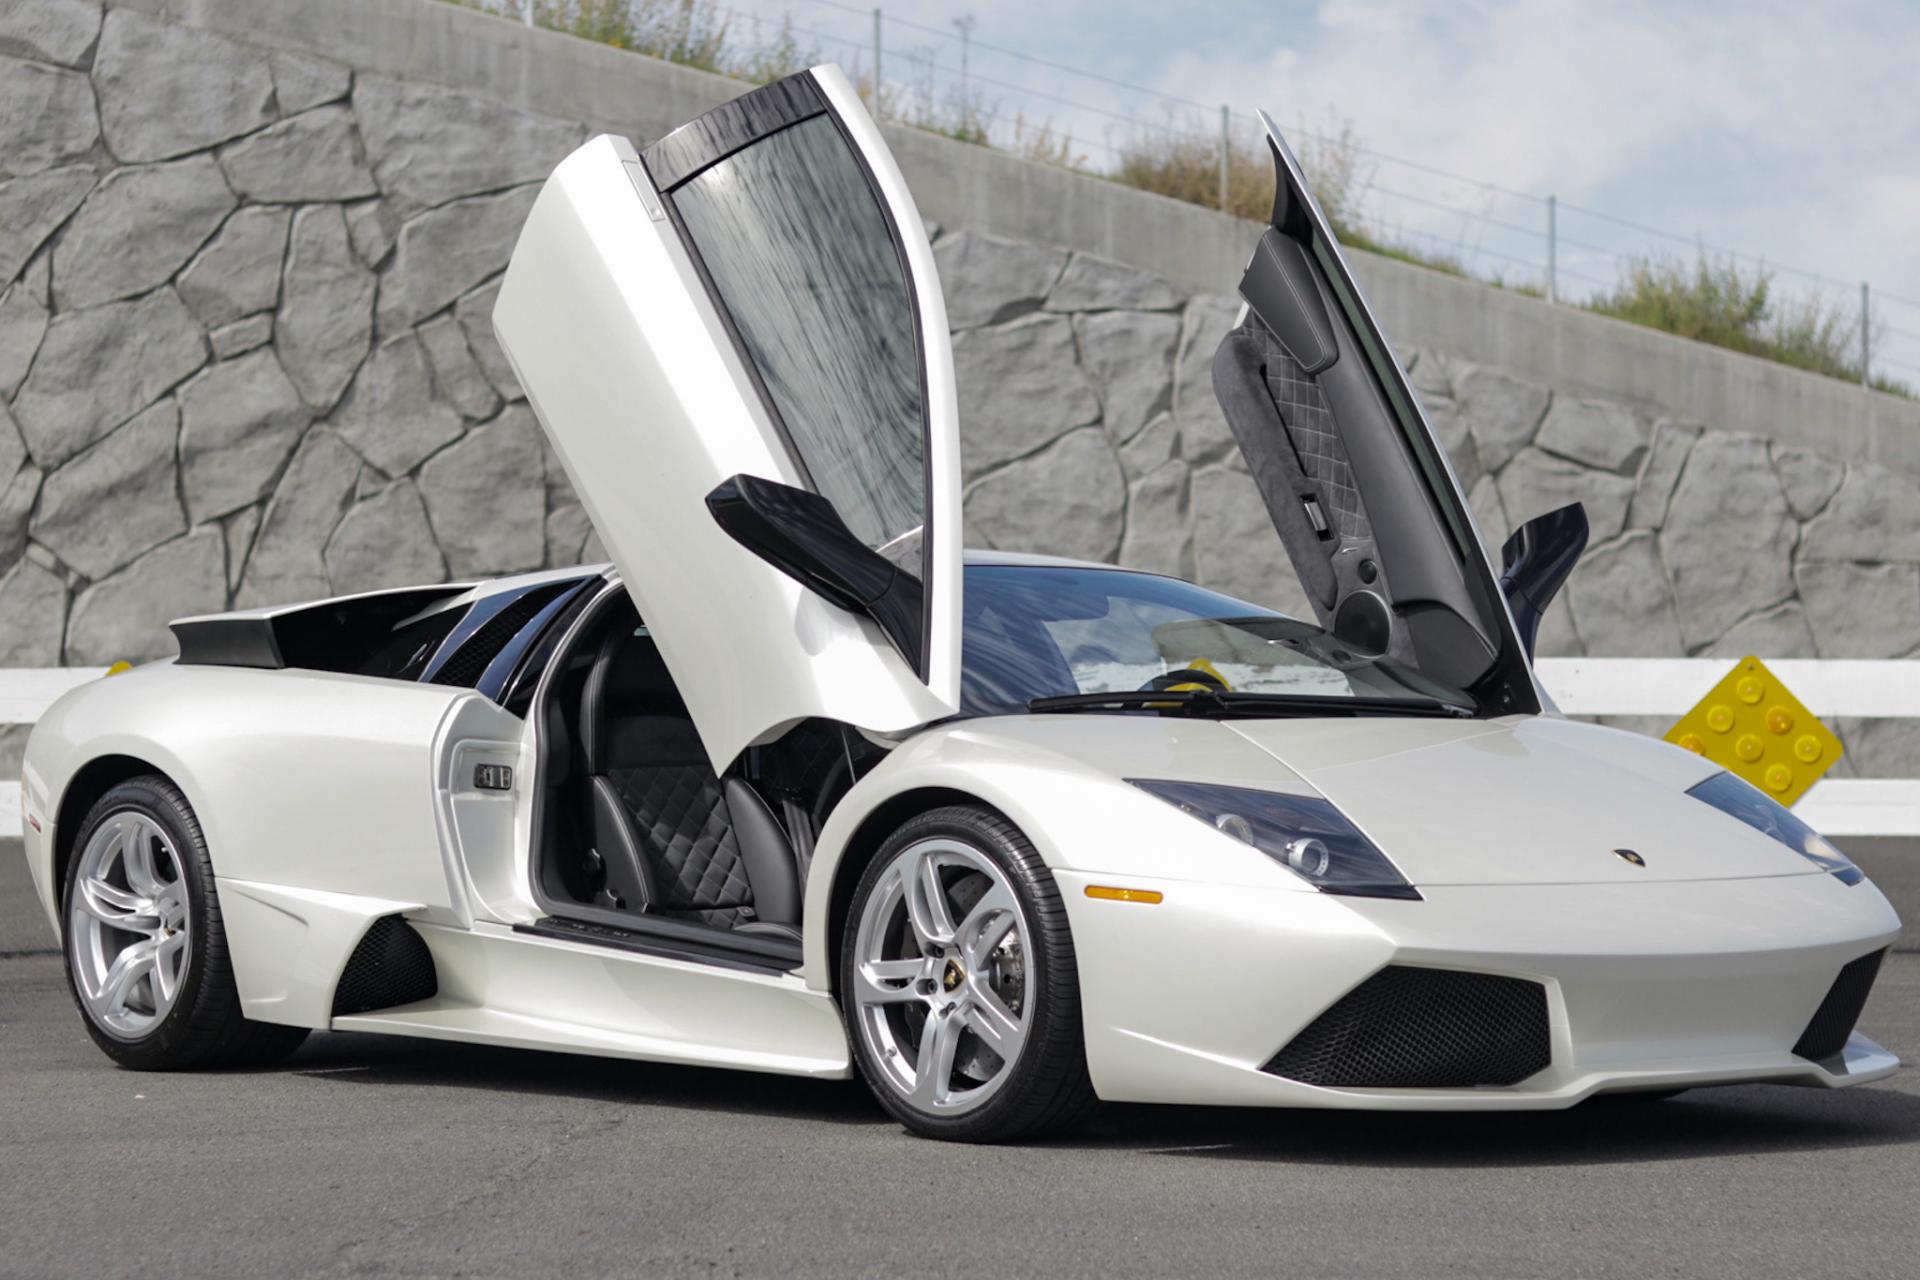 Used 2009 Lamborghini Murcielago For Sale (Sold) | West Coast Exotic Cars  Stock #C1683b